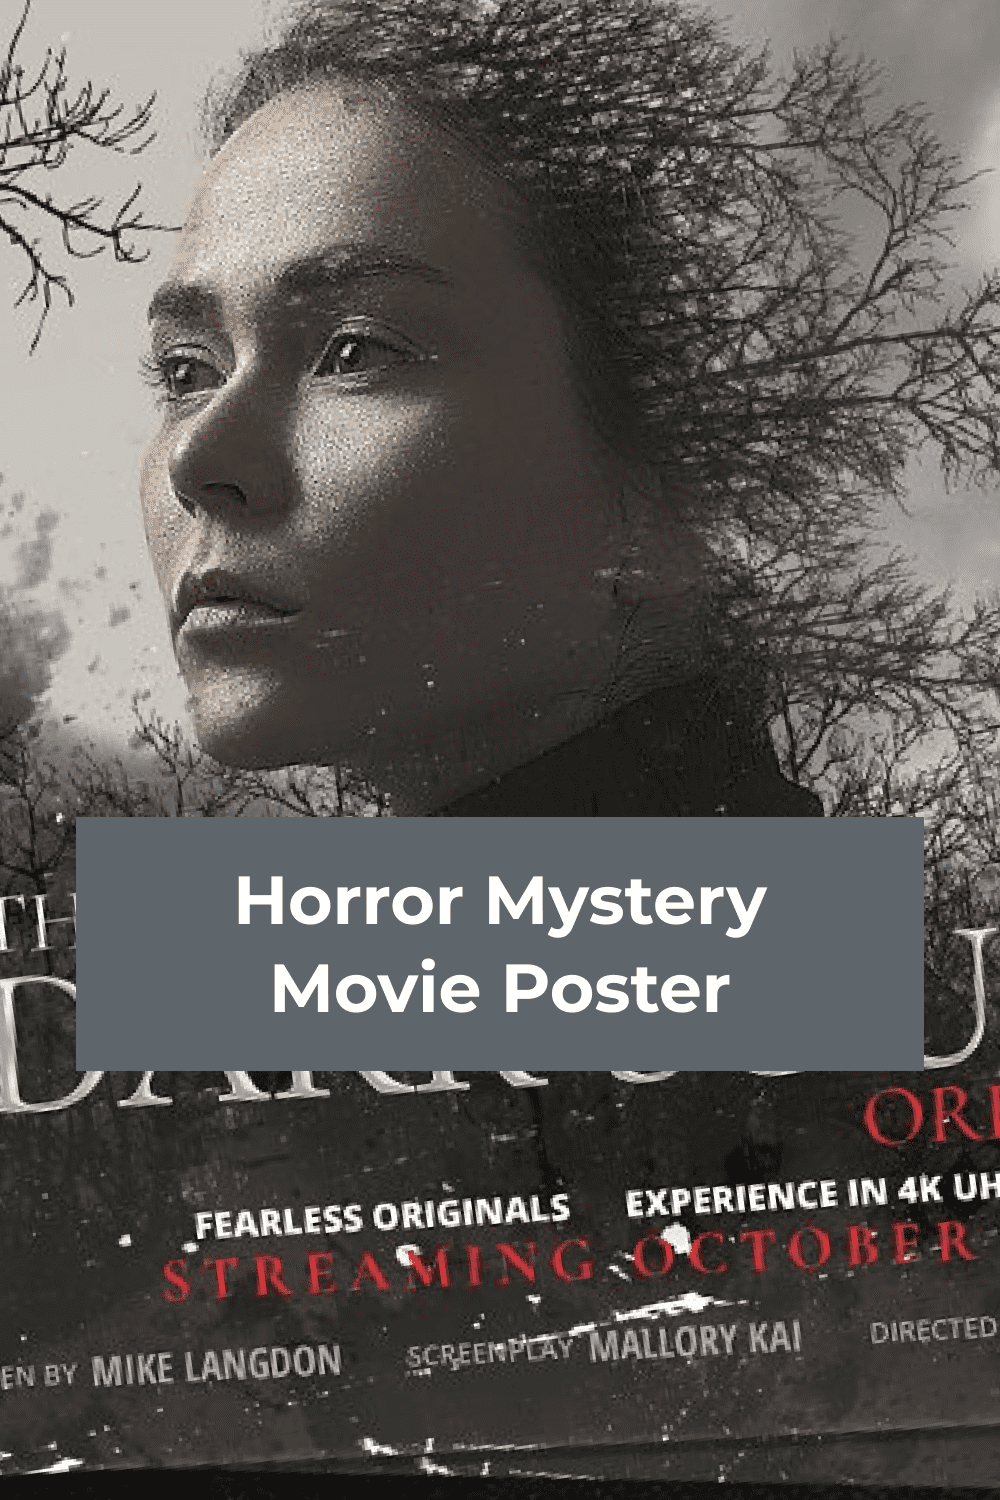 Horror Mystery Movie Poster pinterest image.